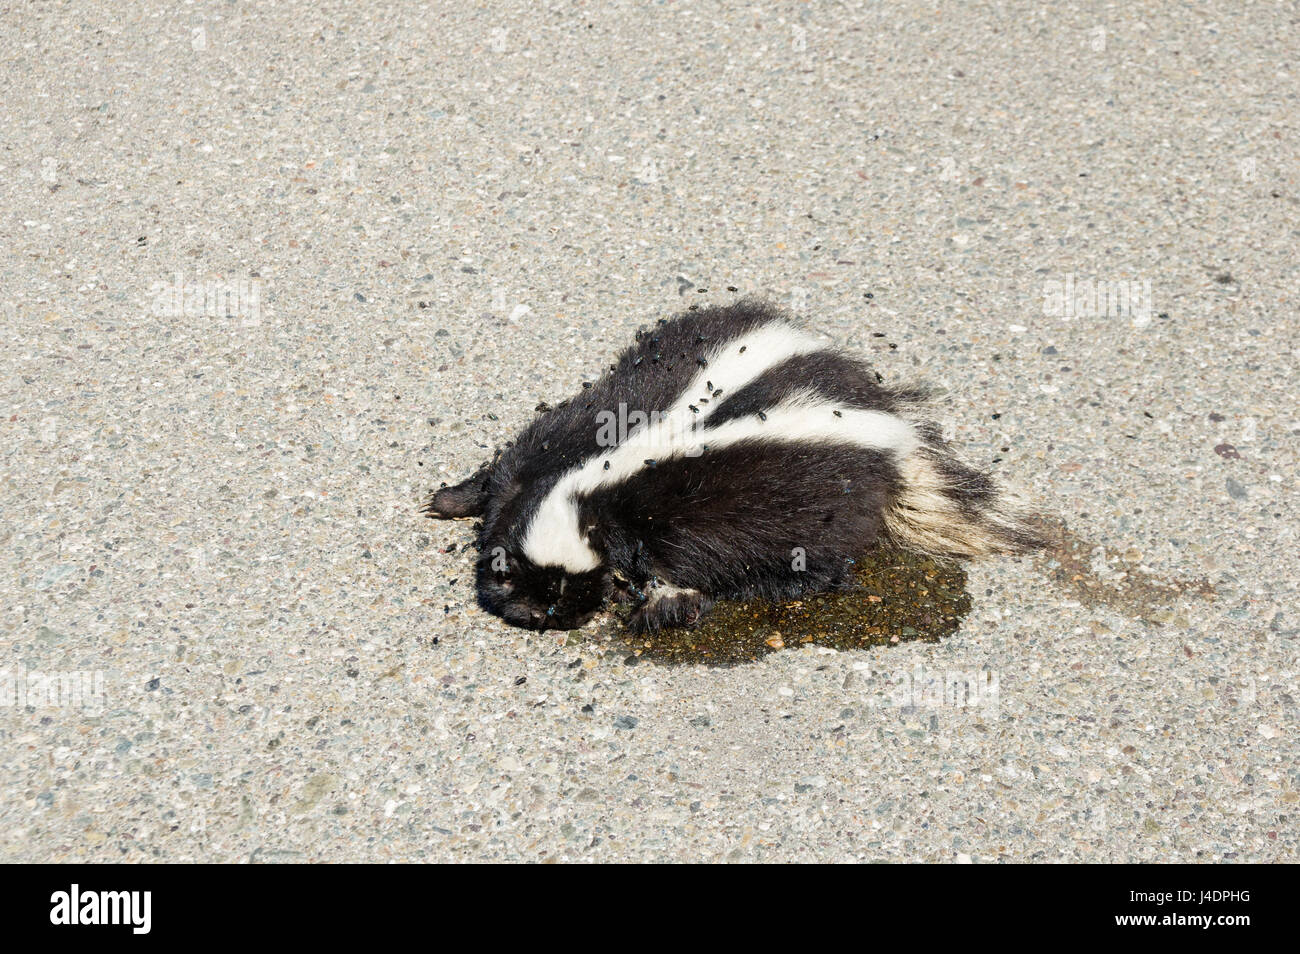 dead roadkill skunk with flies on asphalt pavement Stock Photo